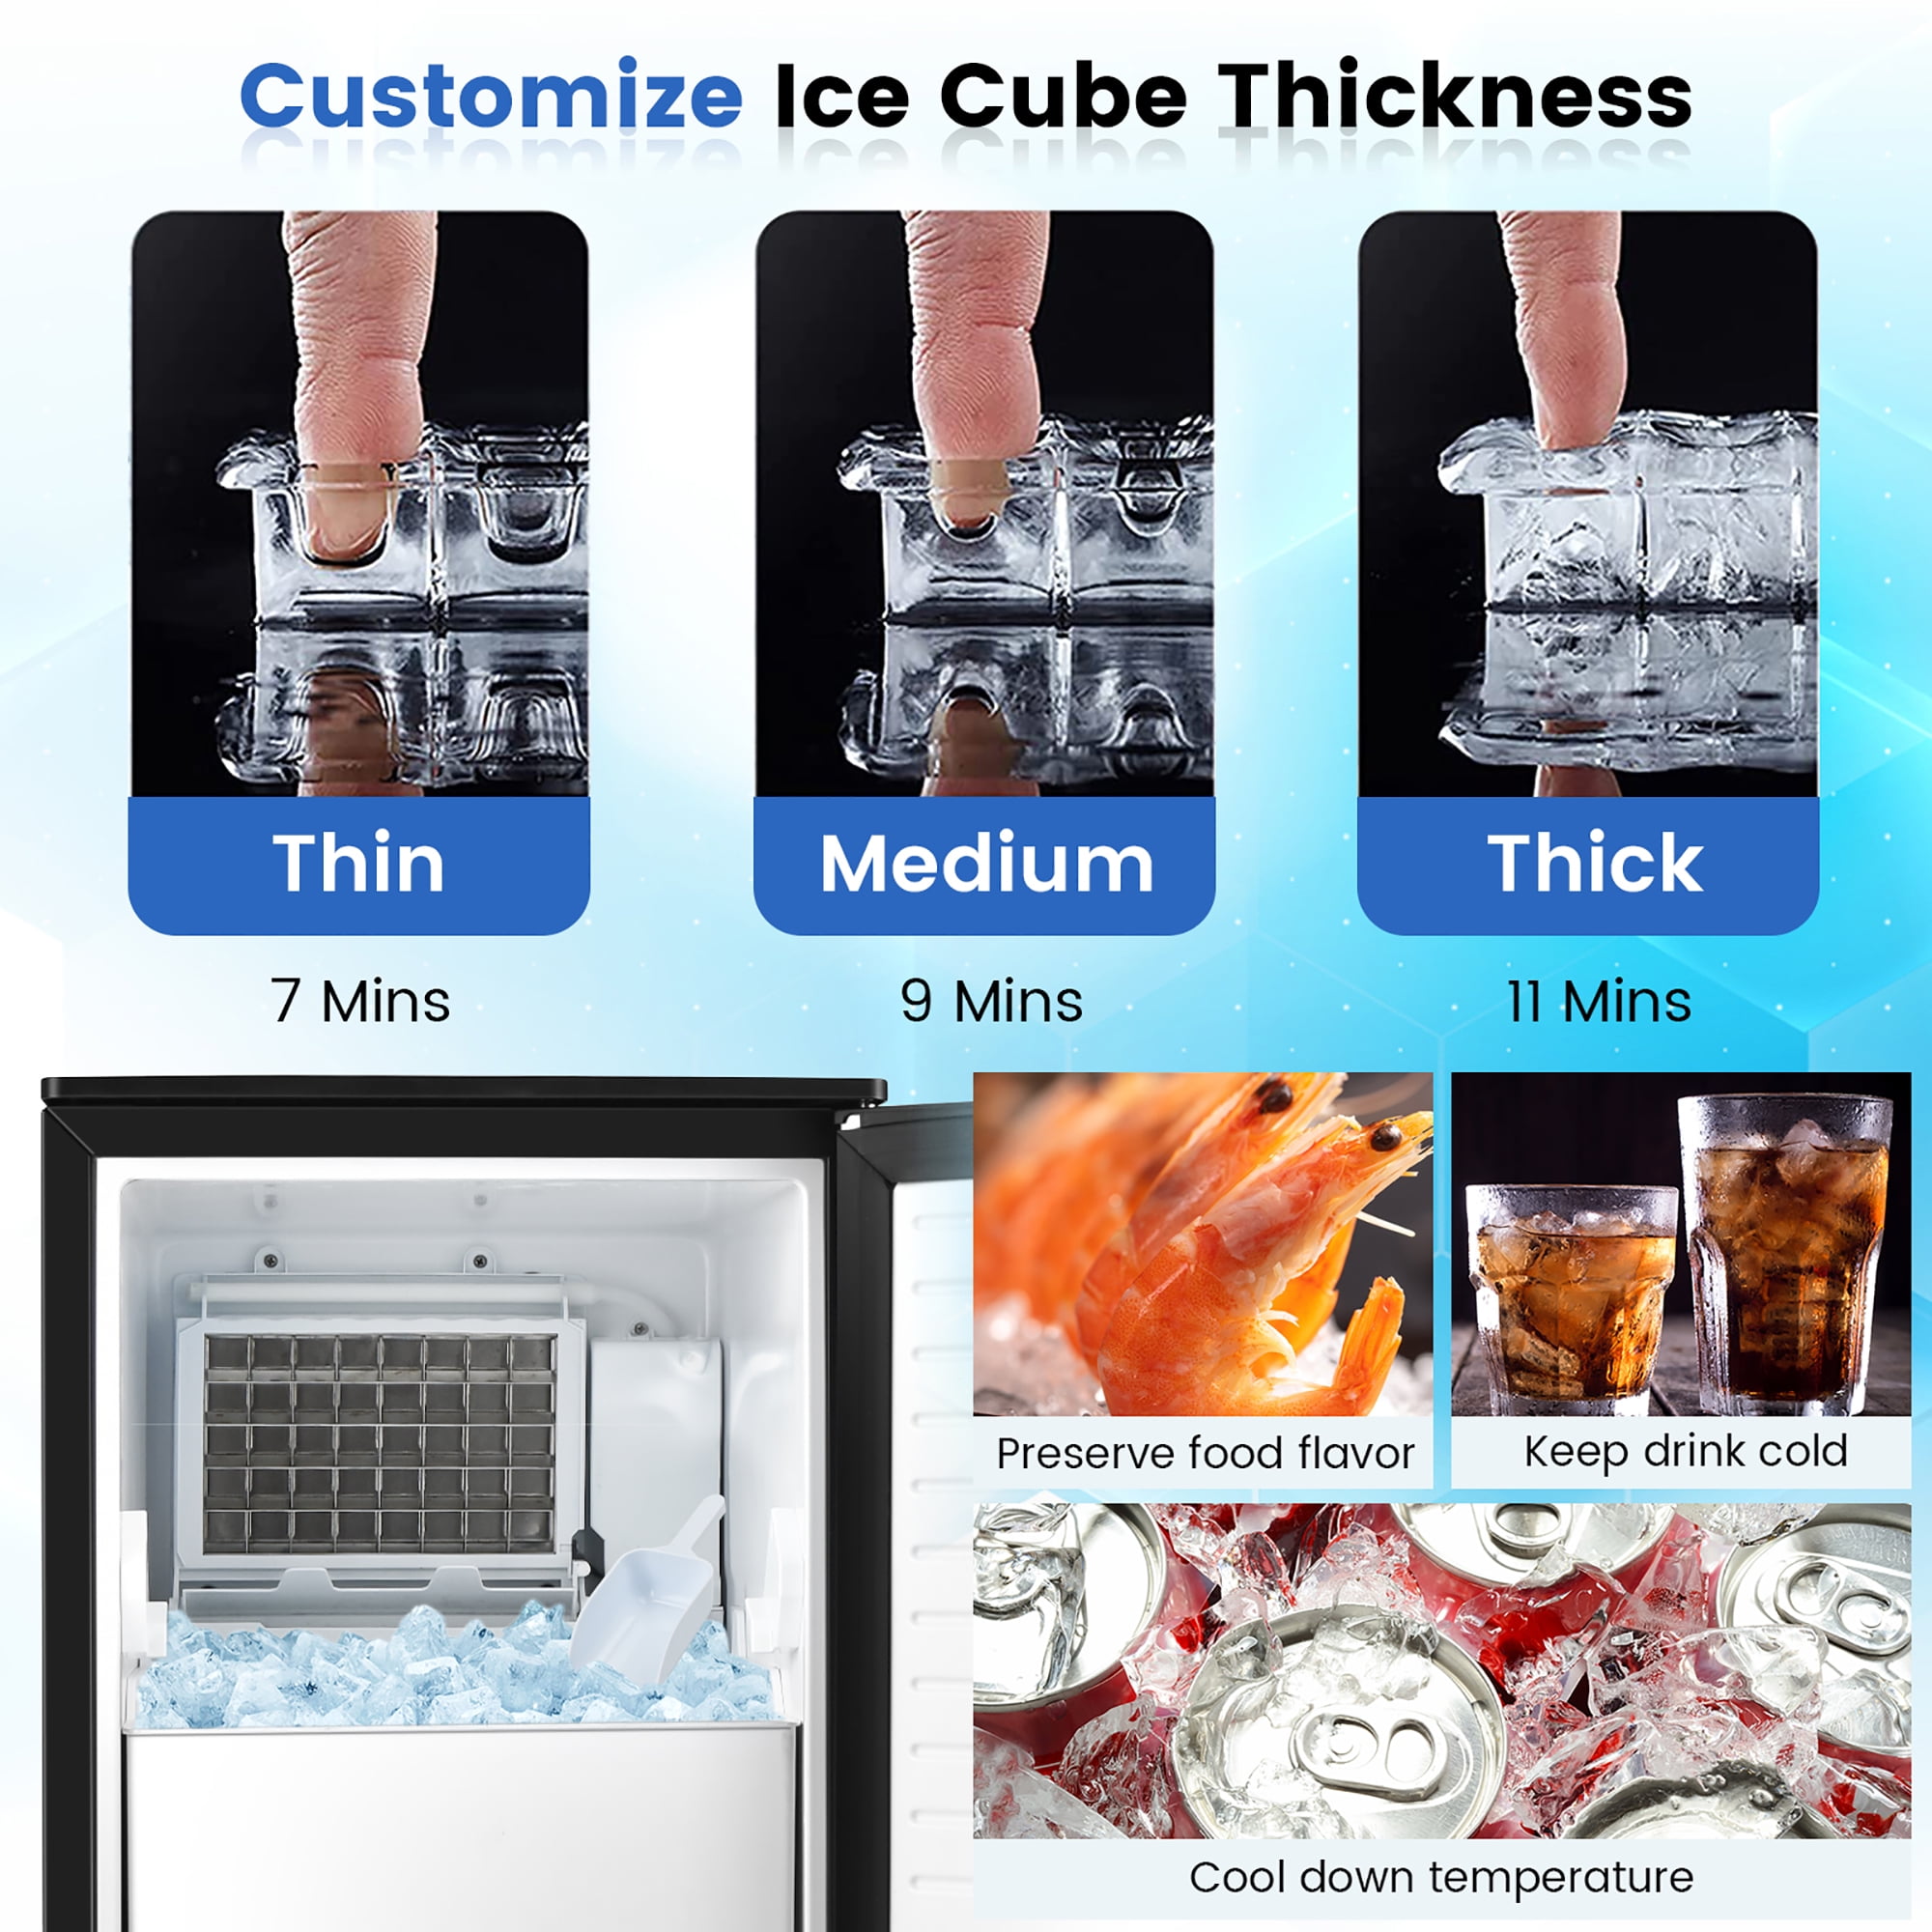 Customizable Clear Ice Maker